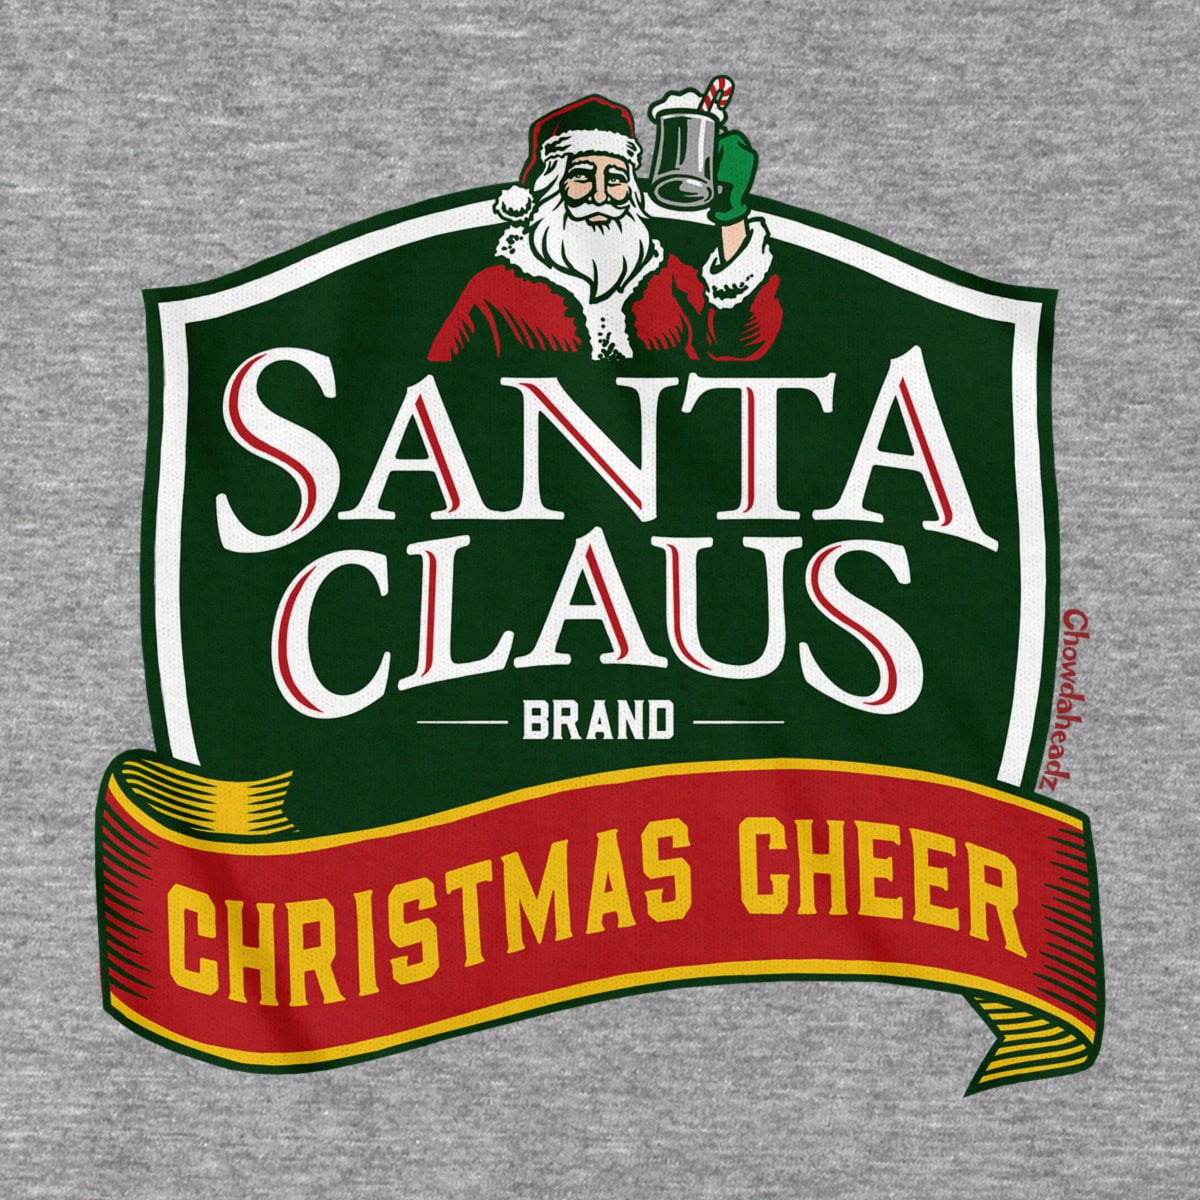 Santa Claus Christmas Cheer Logo T-Shirt - Chowdaheadz